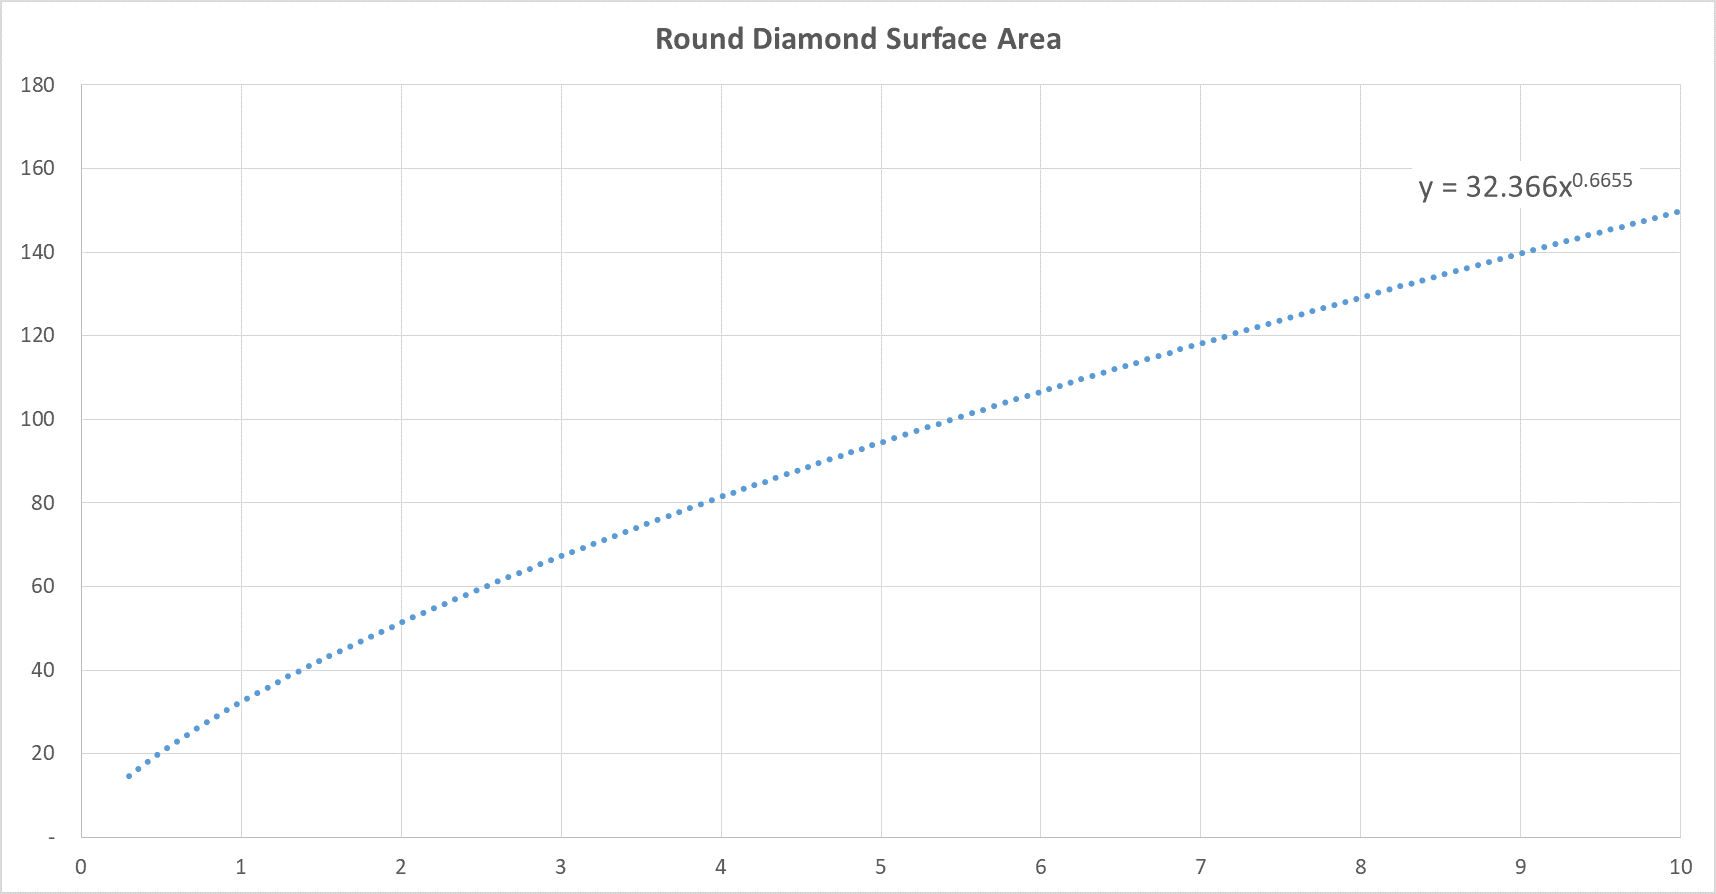 Round Diamond Carat Weight Versus Surface Area Chart